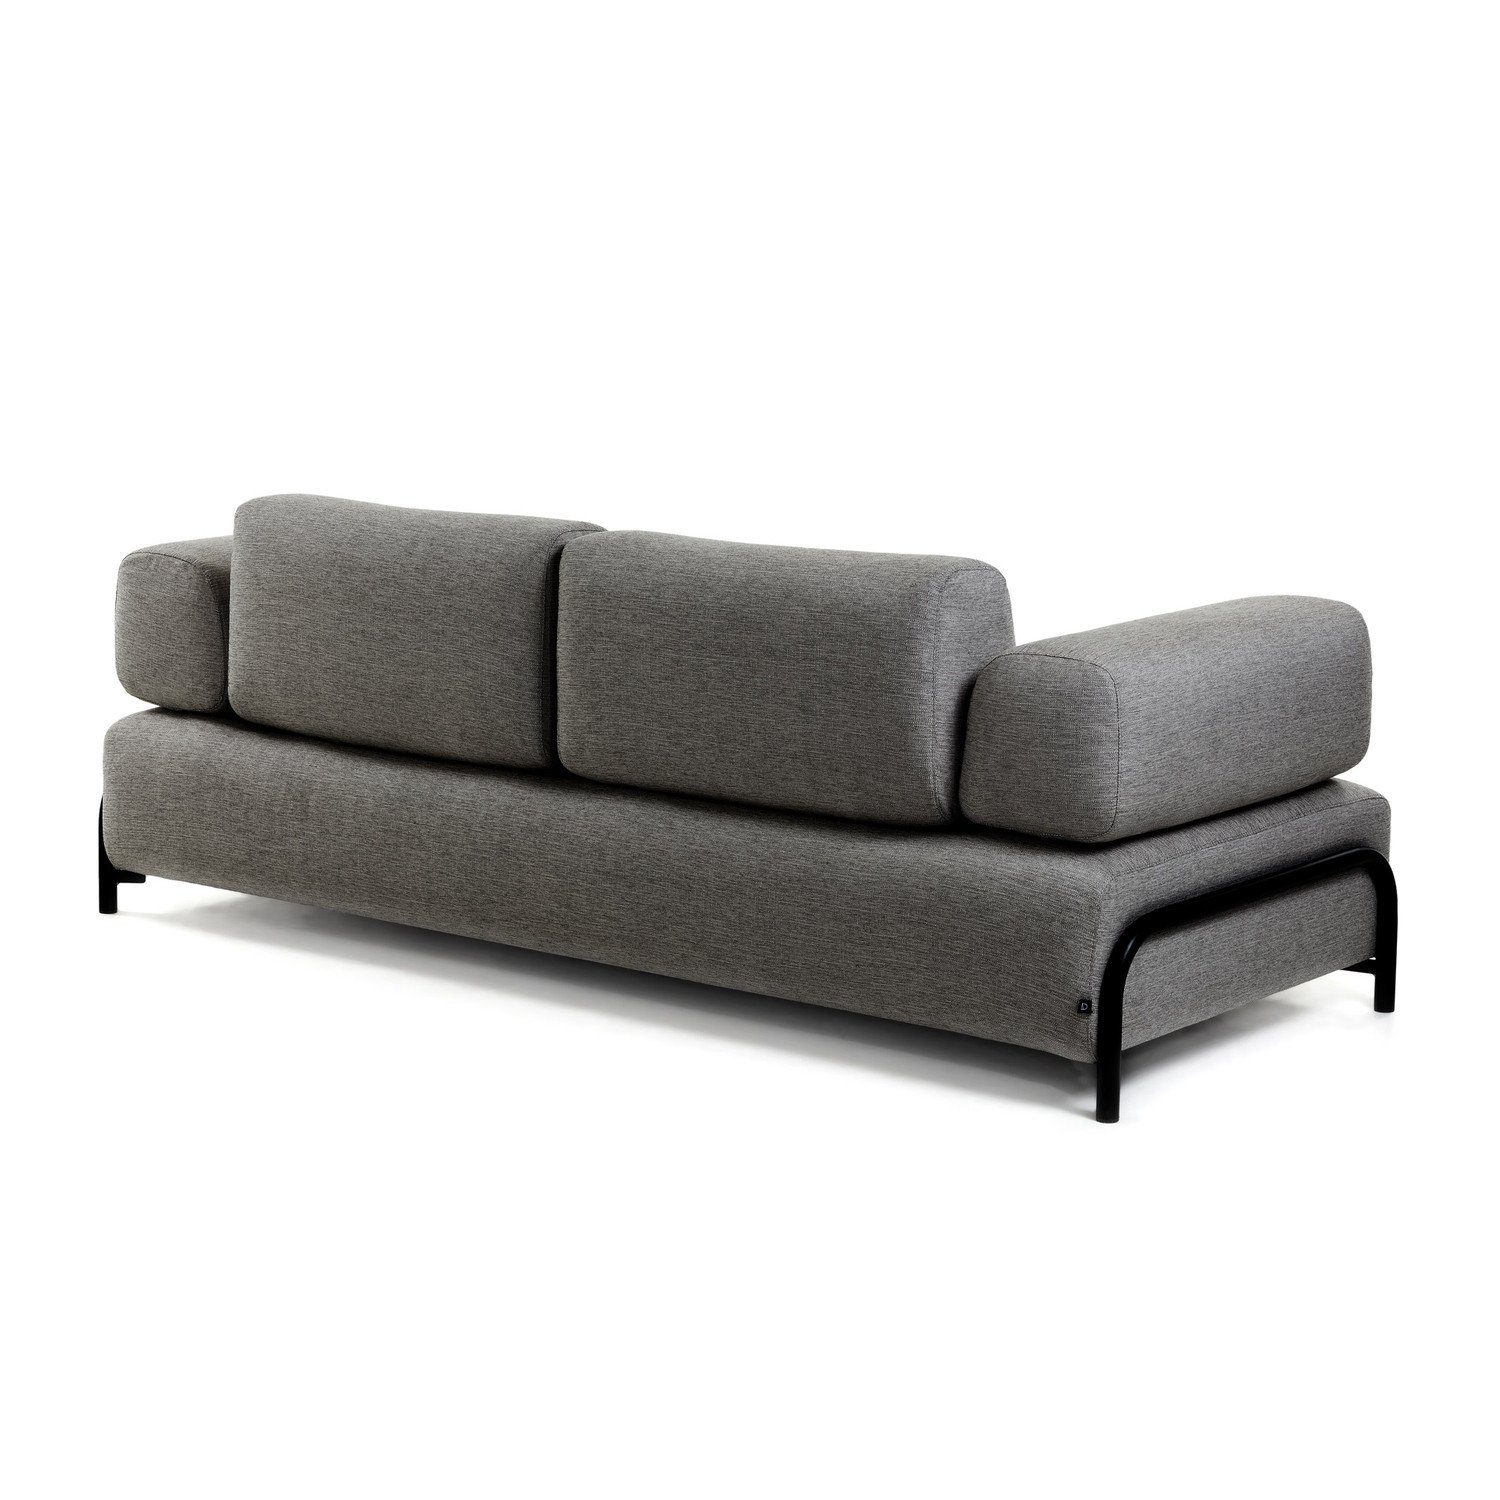 Sofa dunkelgrau 232cm Couch Compo 3-Sitzer Natur24 Sofa